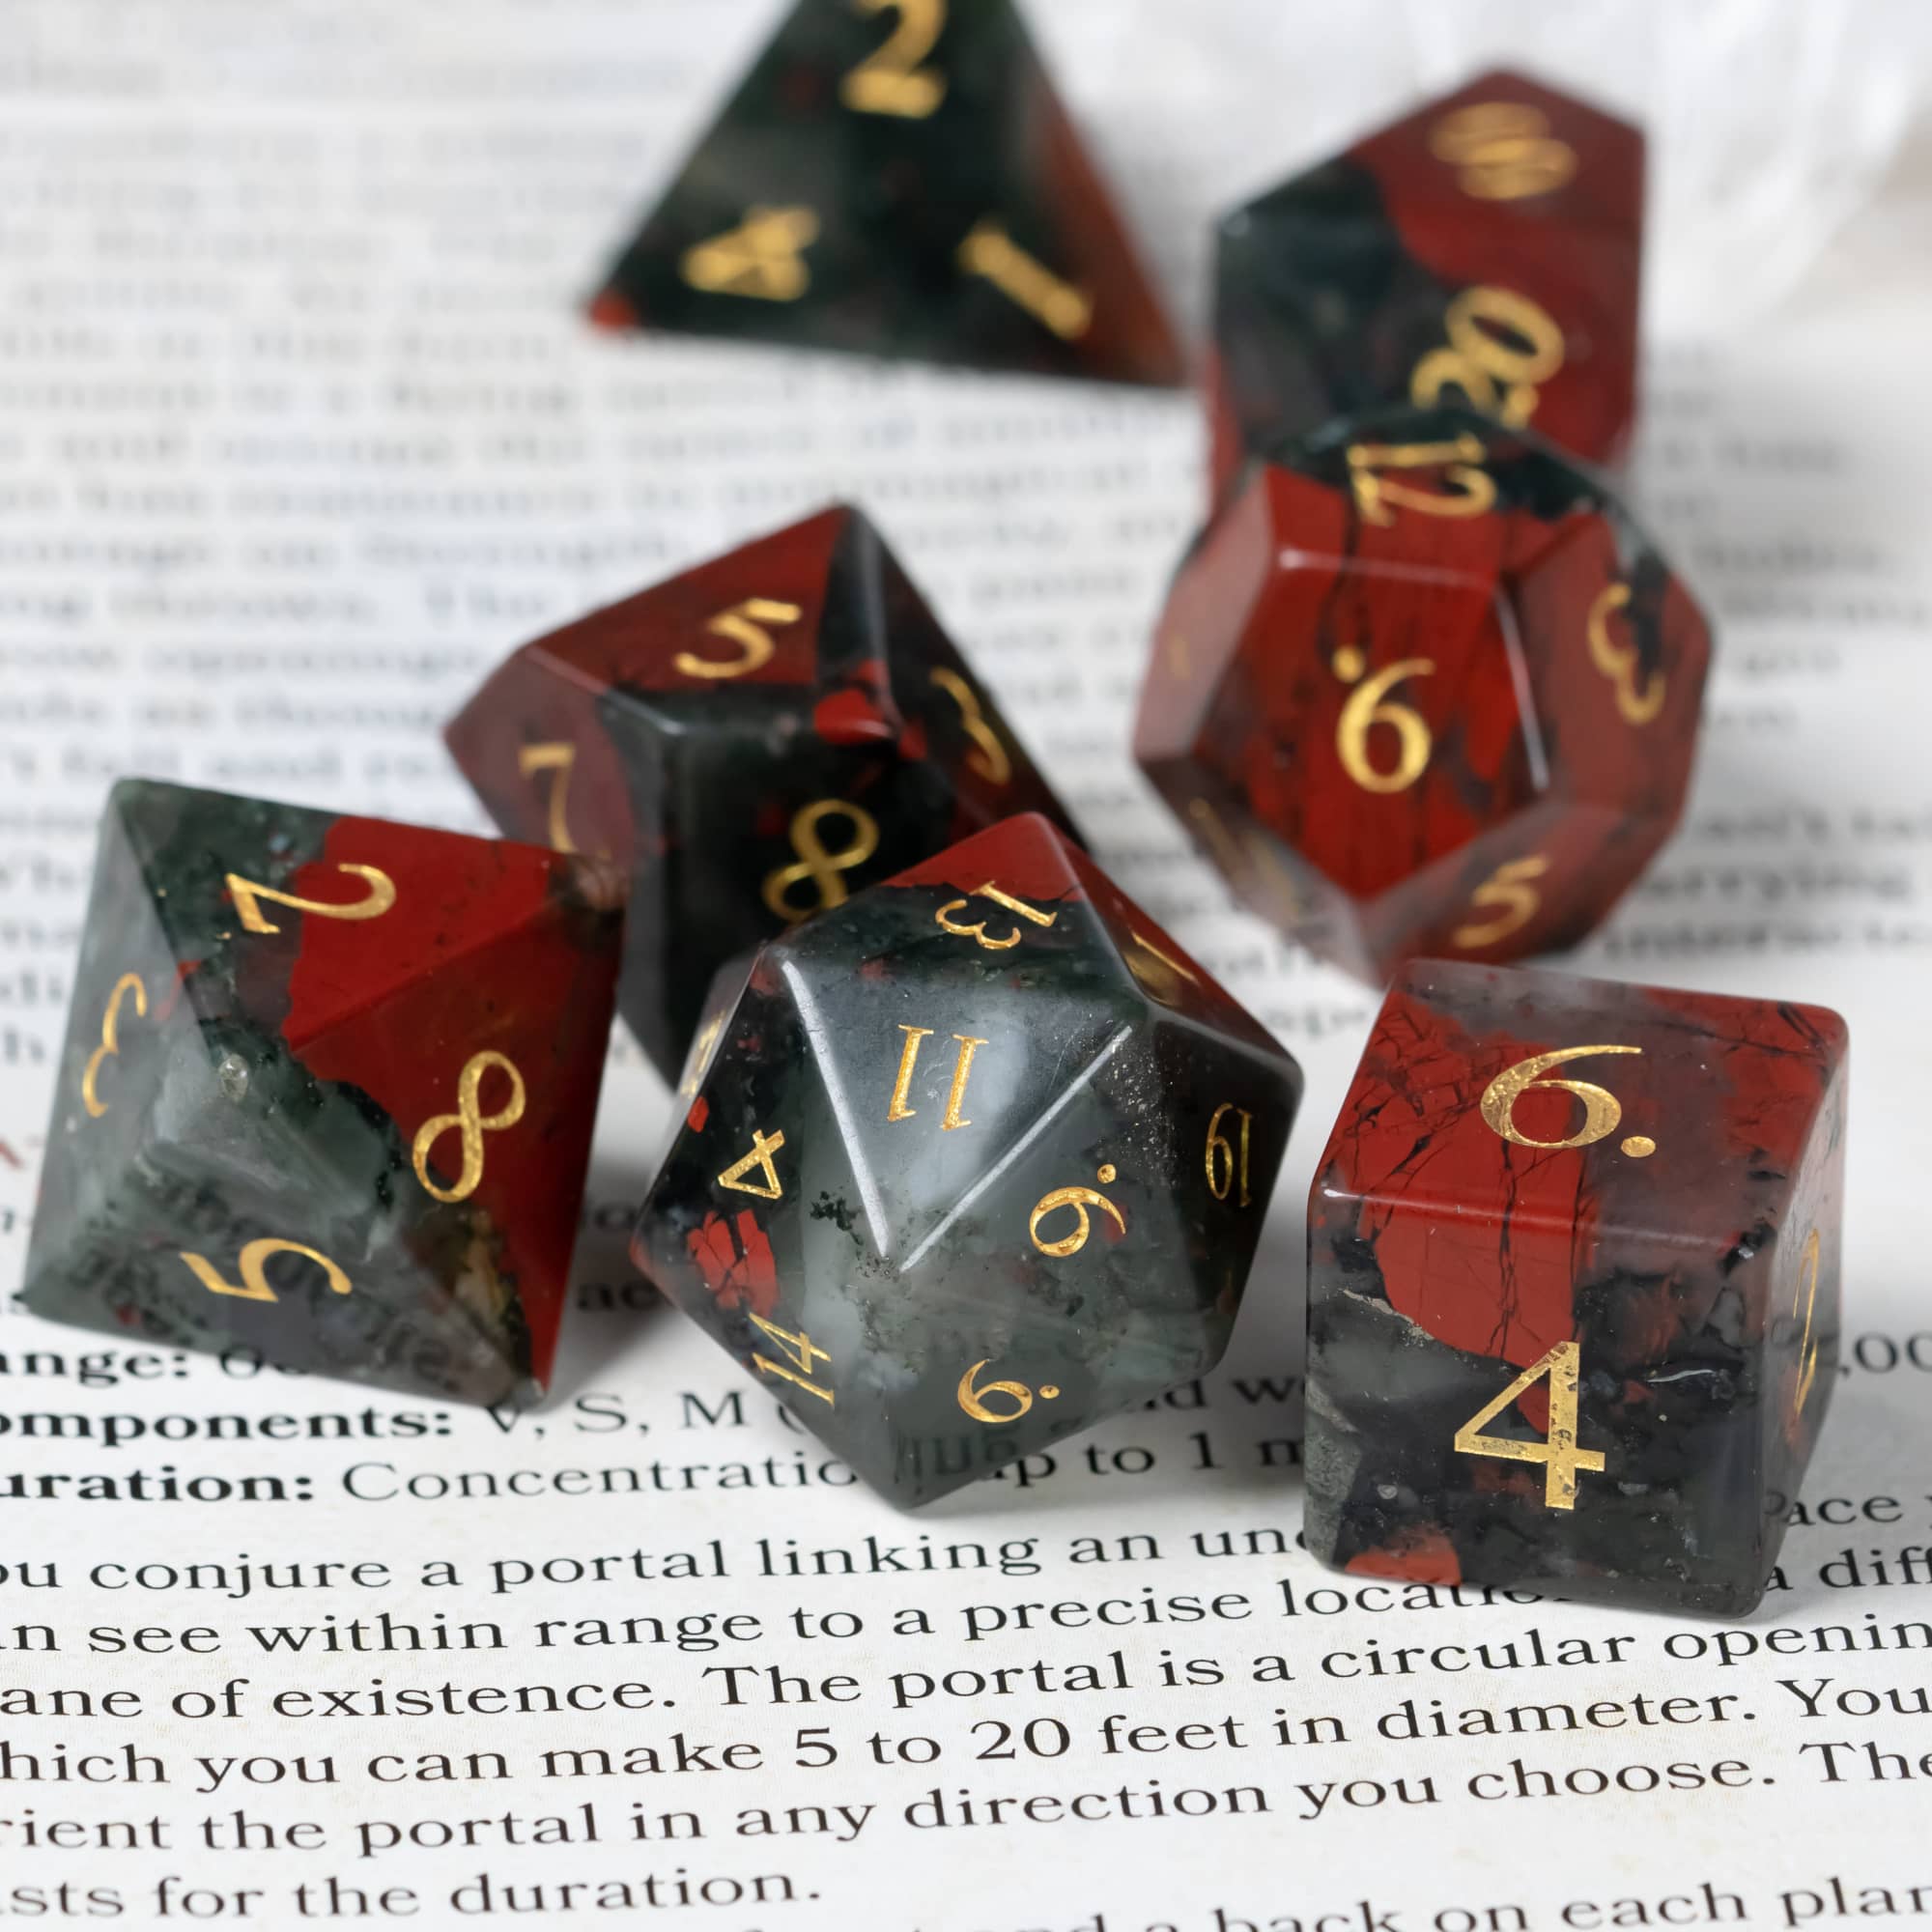 Enchanter's Gems : Bloodstone dice set